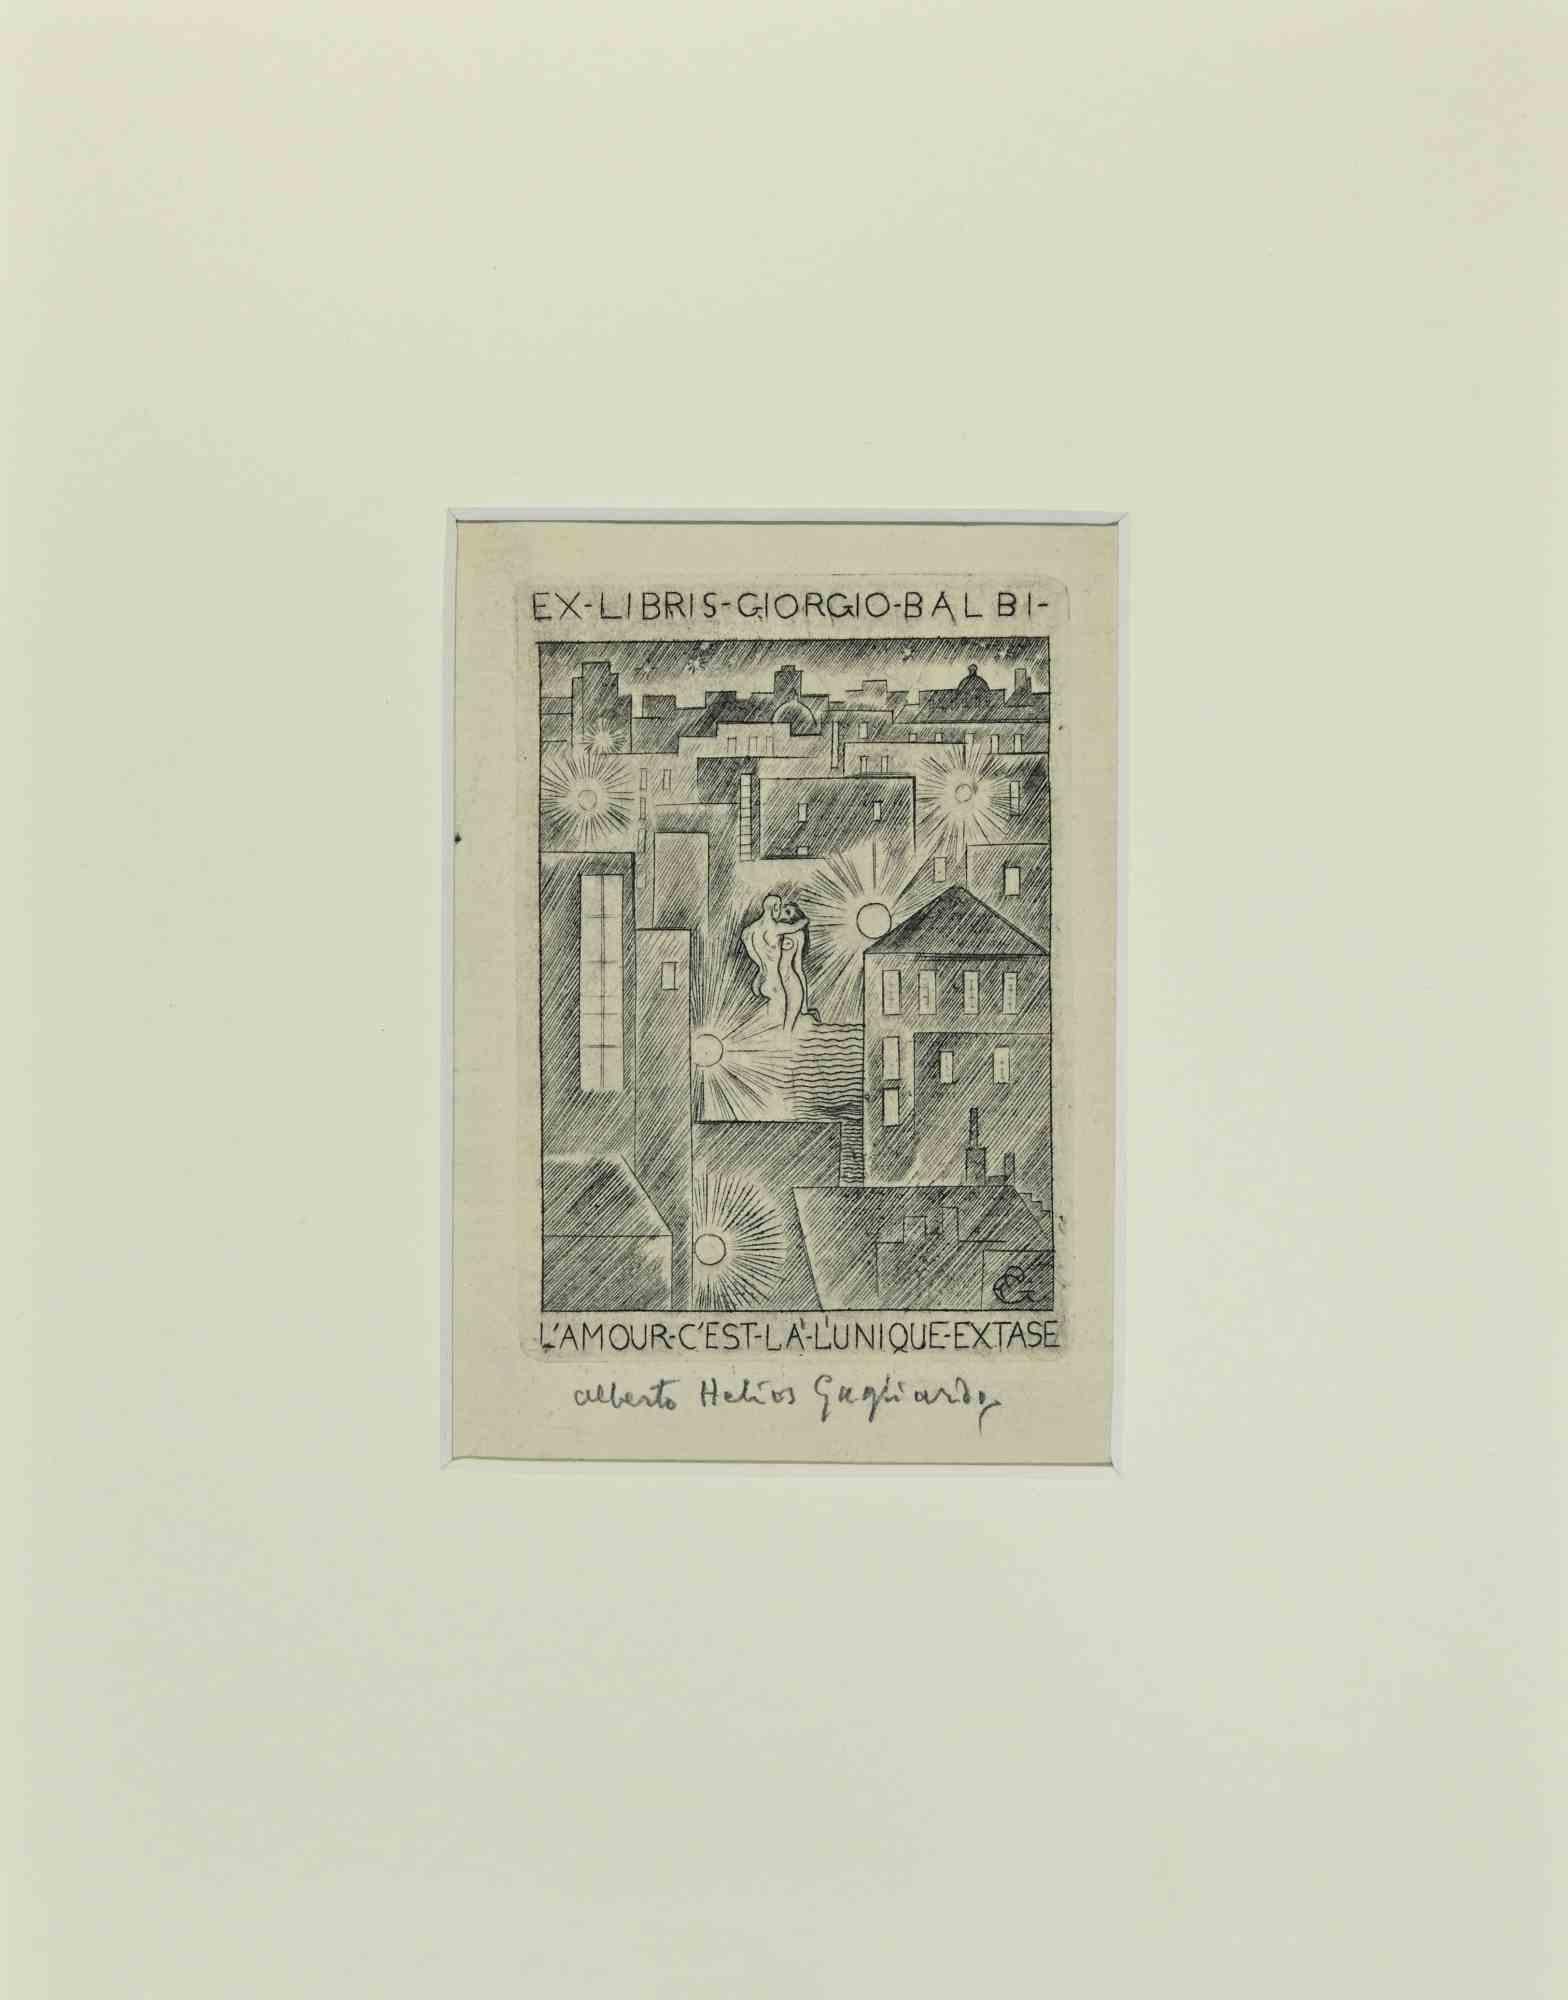  Alberto Helios Gagliardo Figurative Print - Ex Libris  -  Giorgio Balbi - Etching  - Mid-20th Century